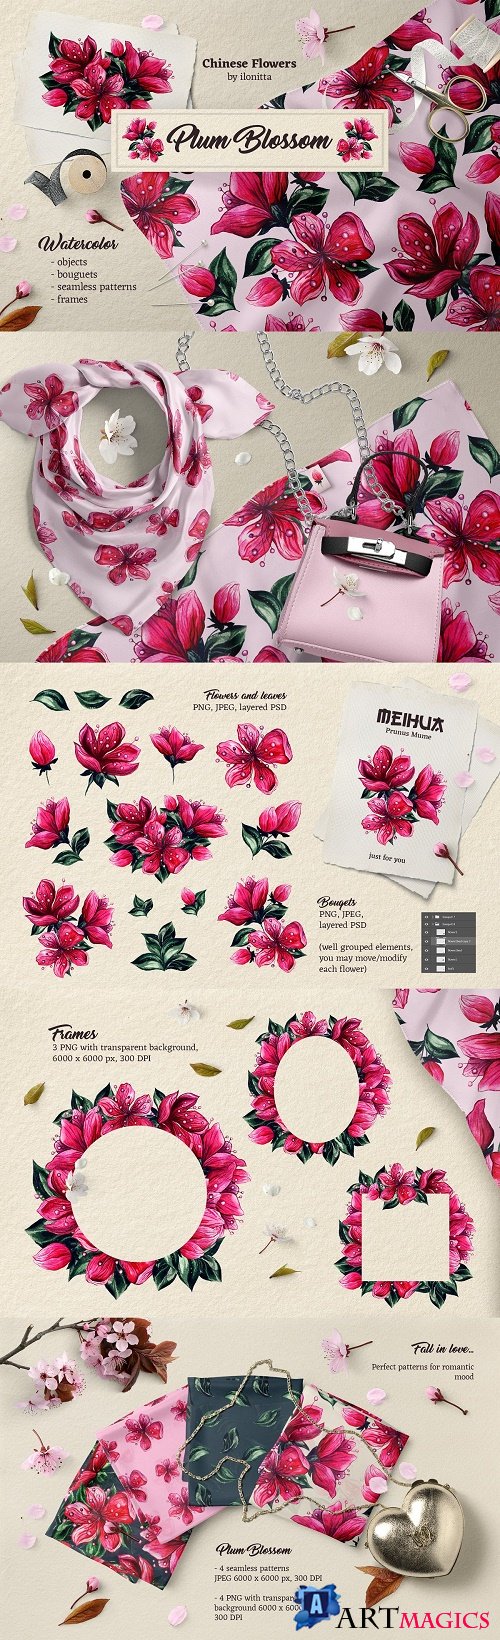 Plum Blossom Watercolor Flowers Art - 4469925